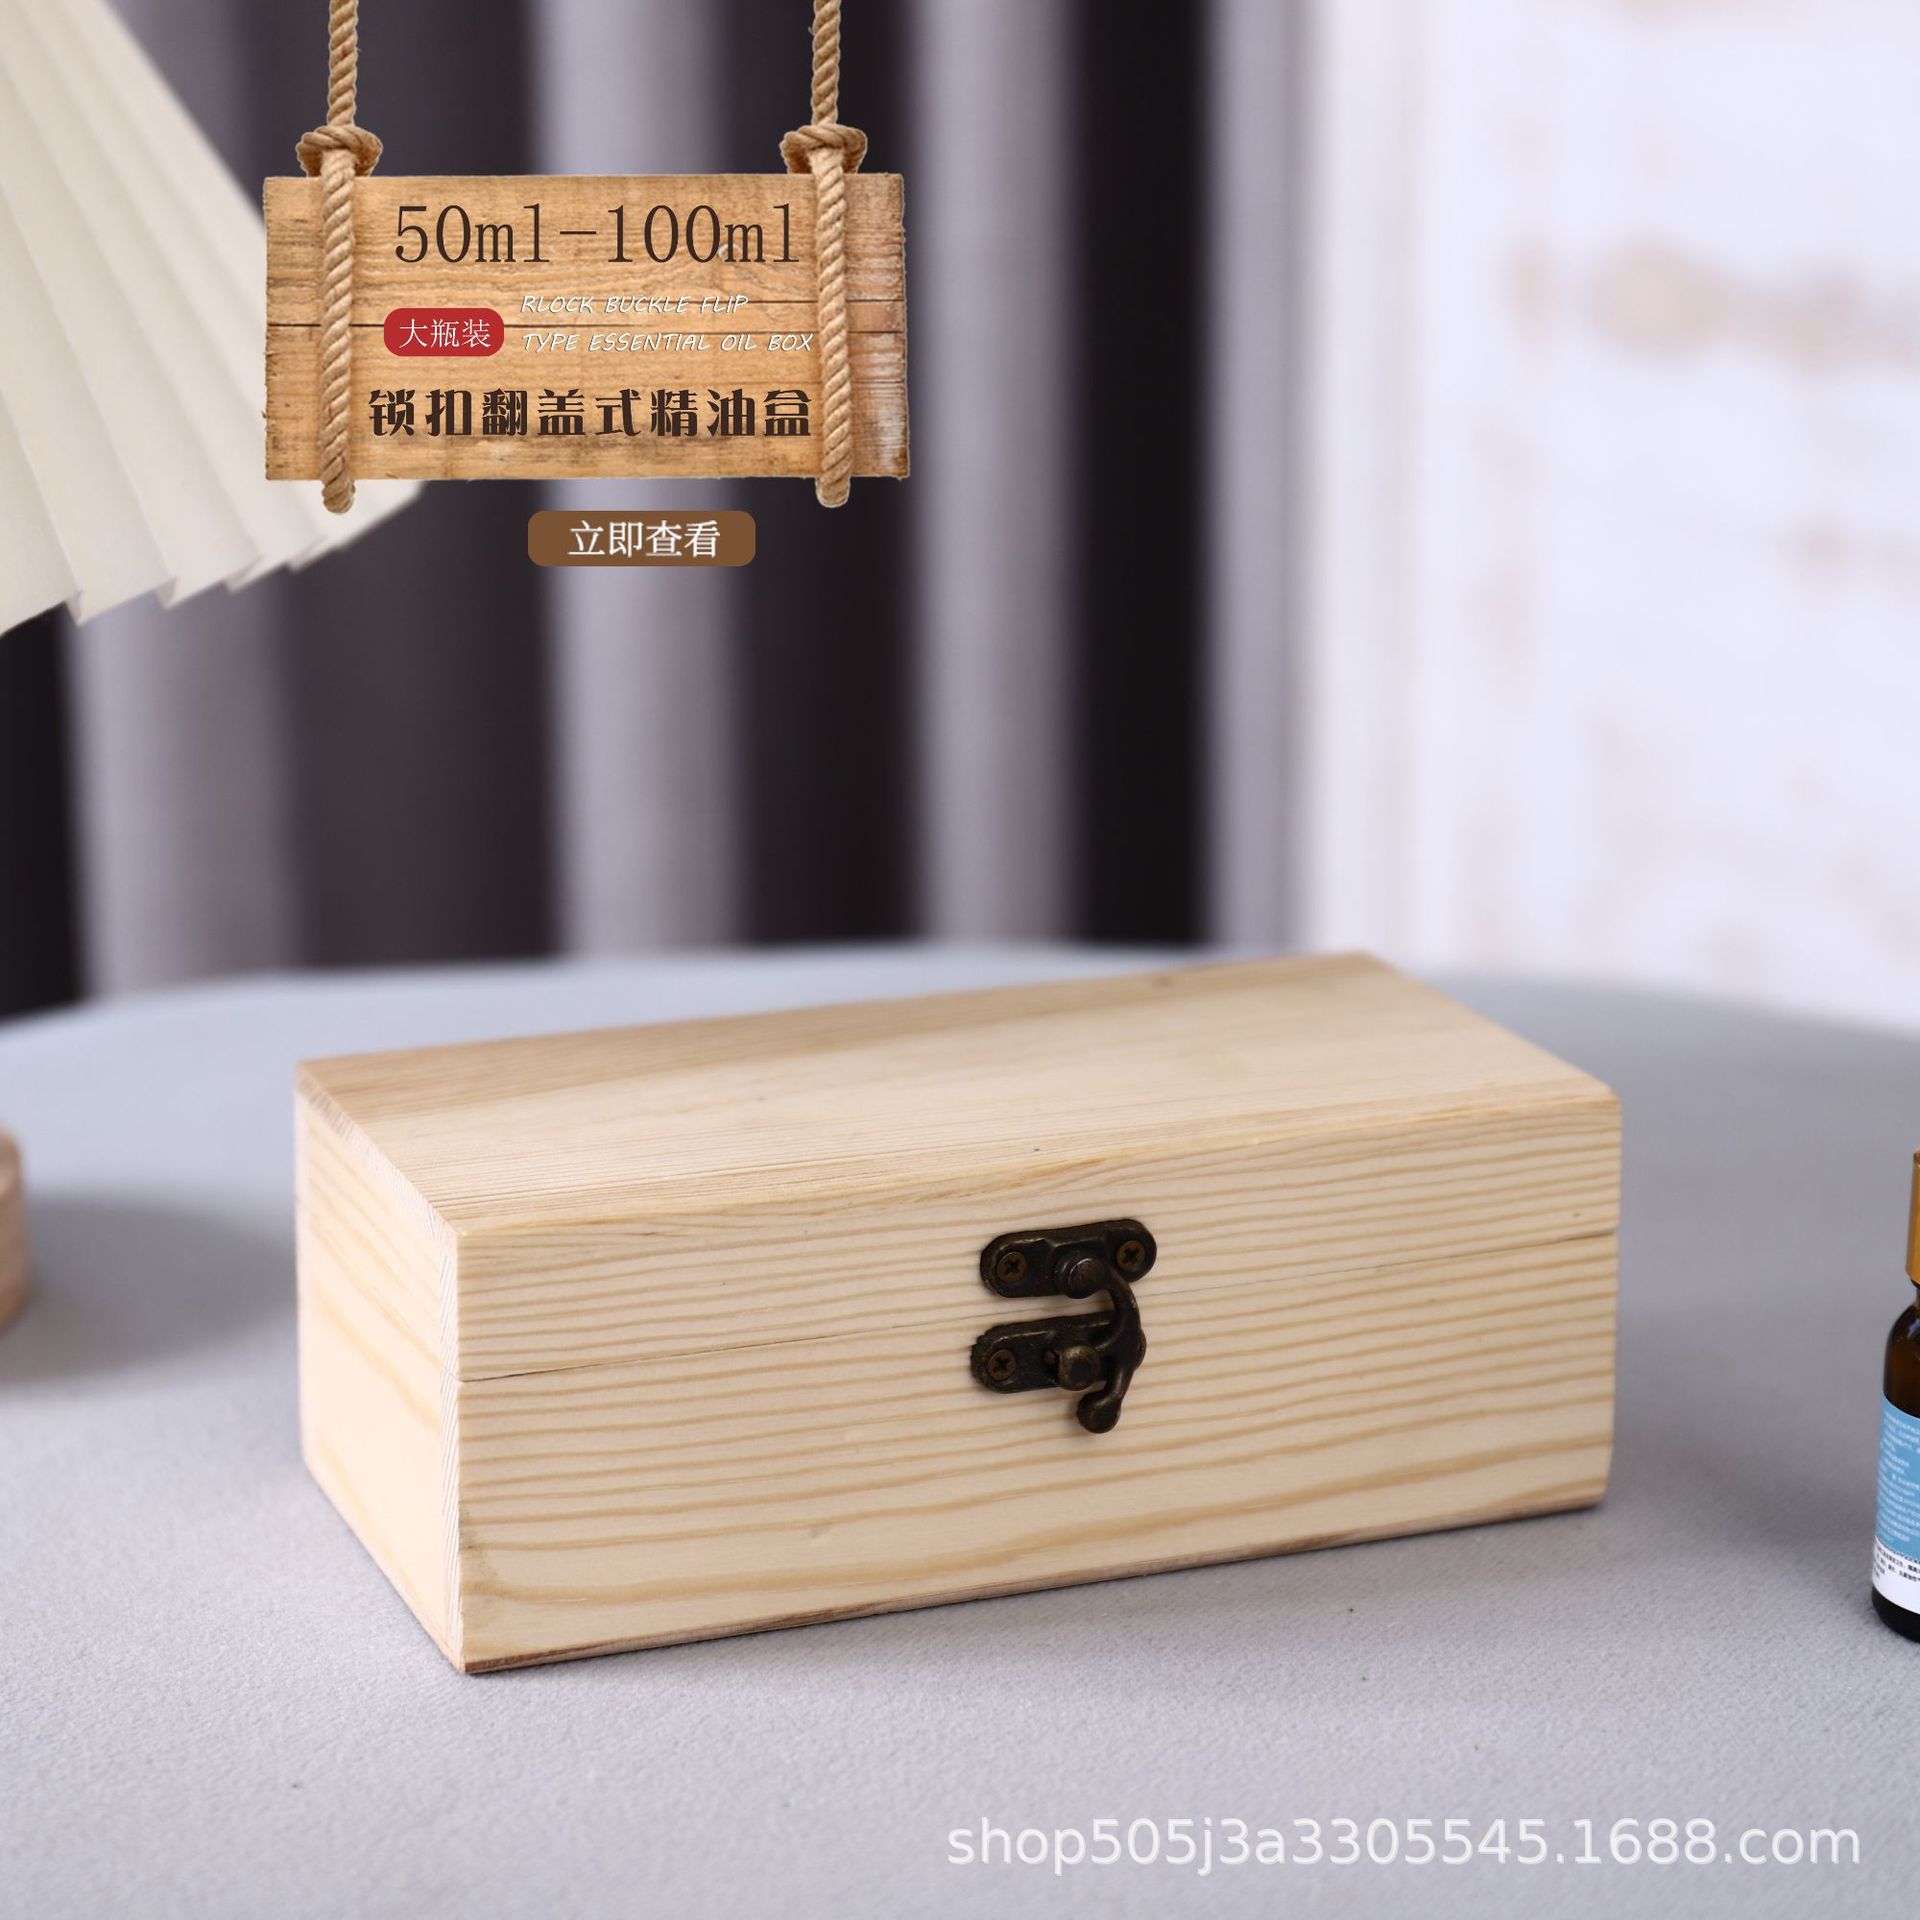 Wooden Essential Oil Box Single Essential Oil Pine Storage Box with Lining Wooden Essential Oil Box Aromatherapy Bottles Storage Wooden Box